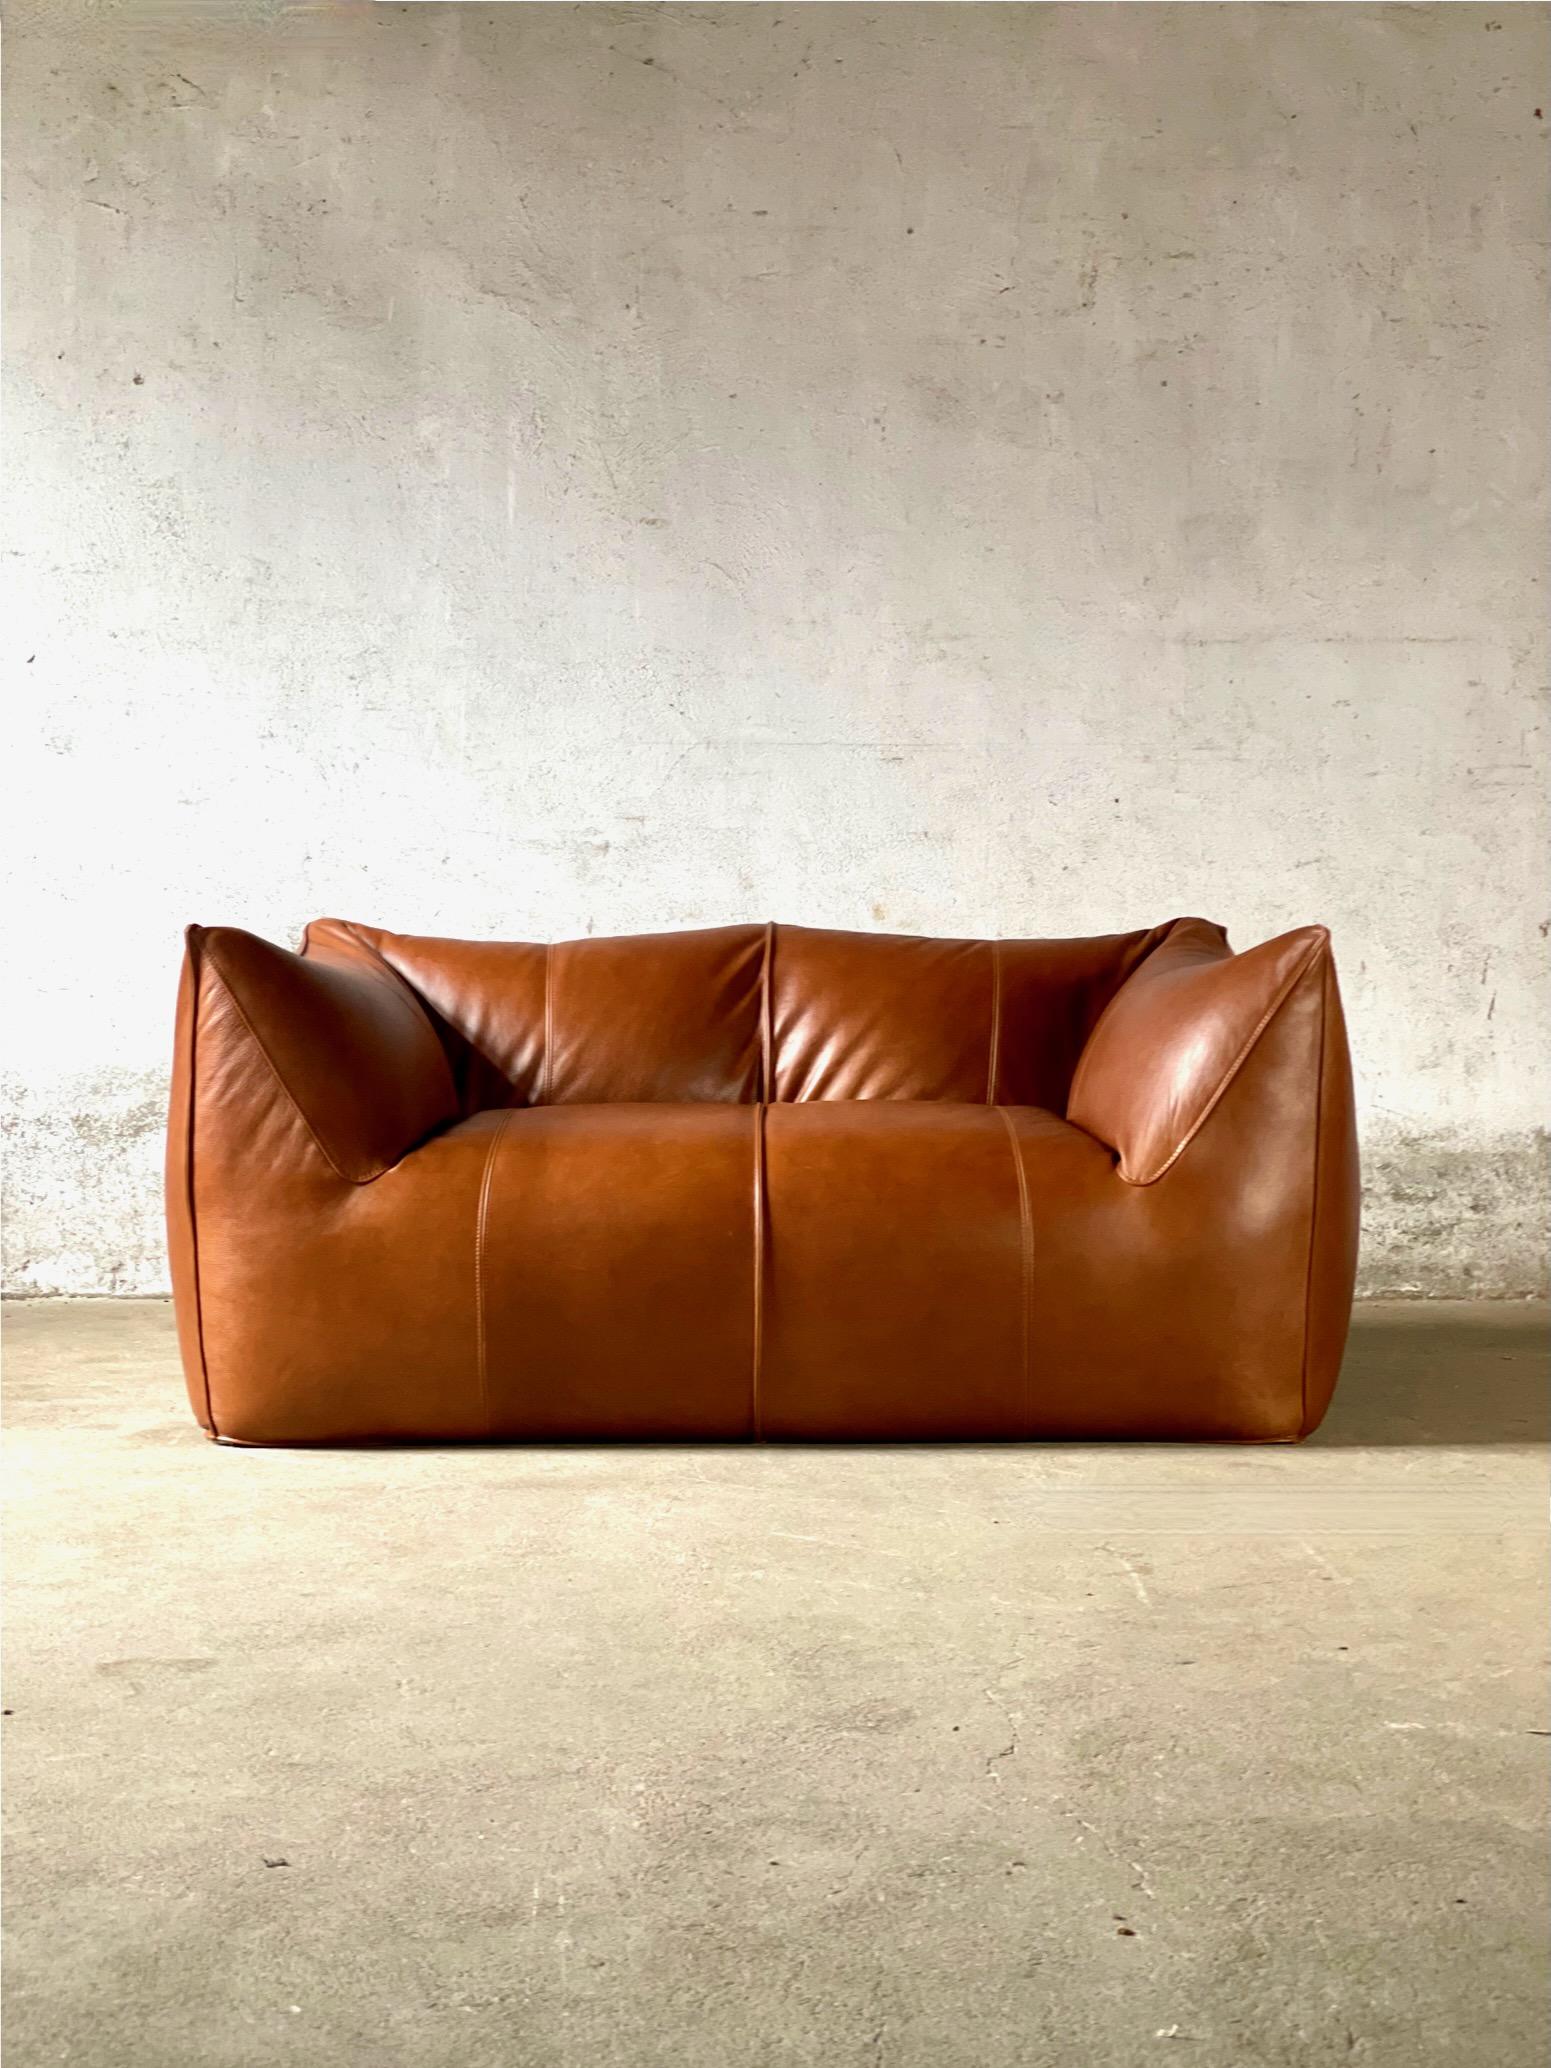 Amazing stock of three Le Bambole Sofa’s by Mario Bellini in Cognac leather.
Le Bambole sofa is a design classic created by Italian architect and designer Mario Bellini in 1972. The sofa's name translates to 